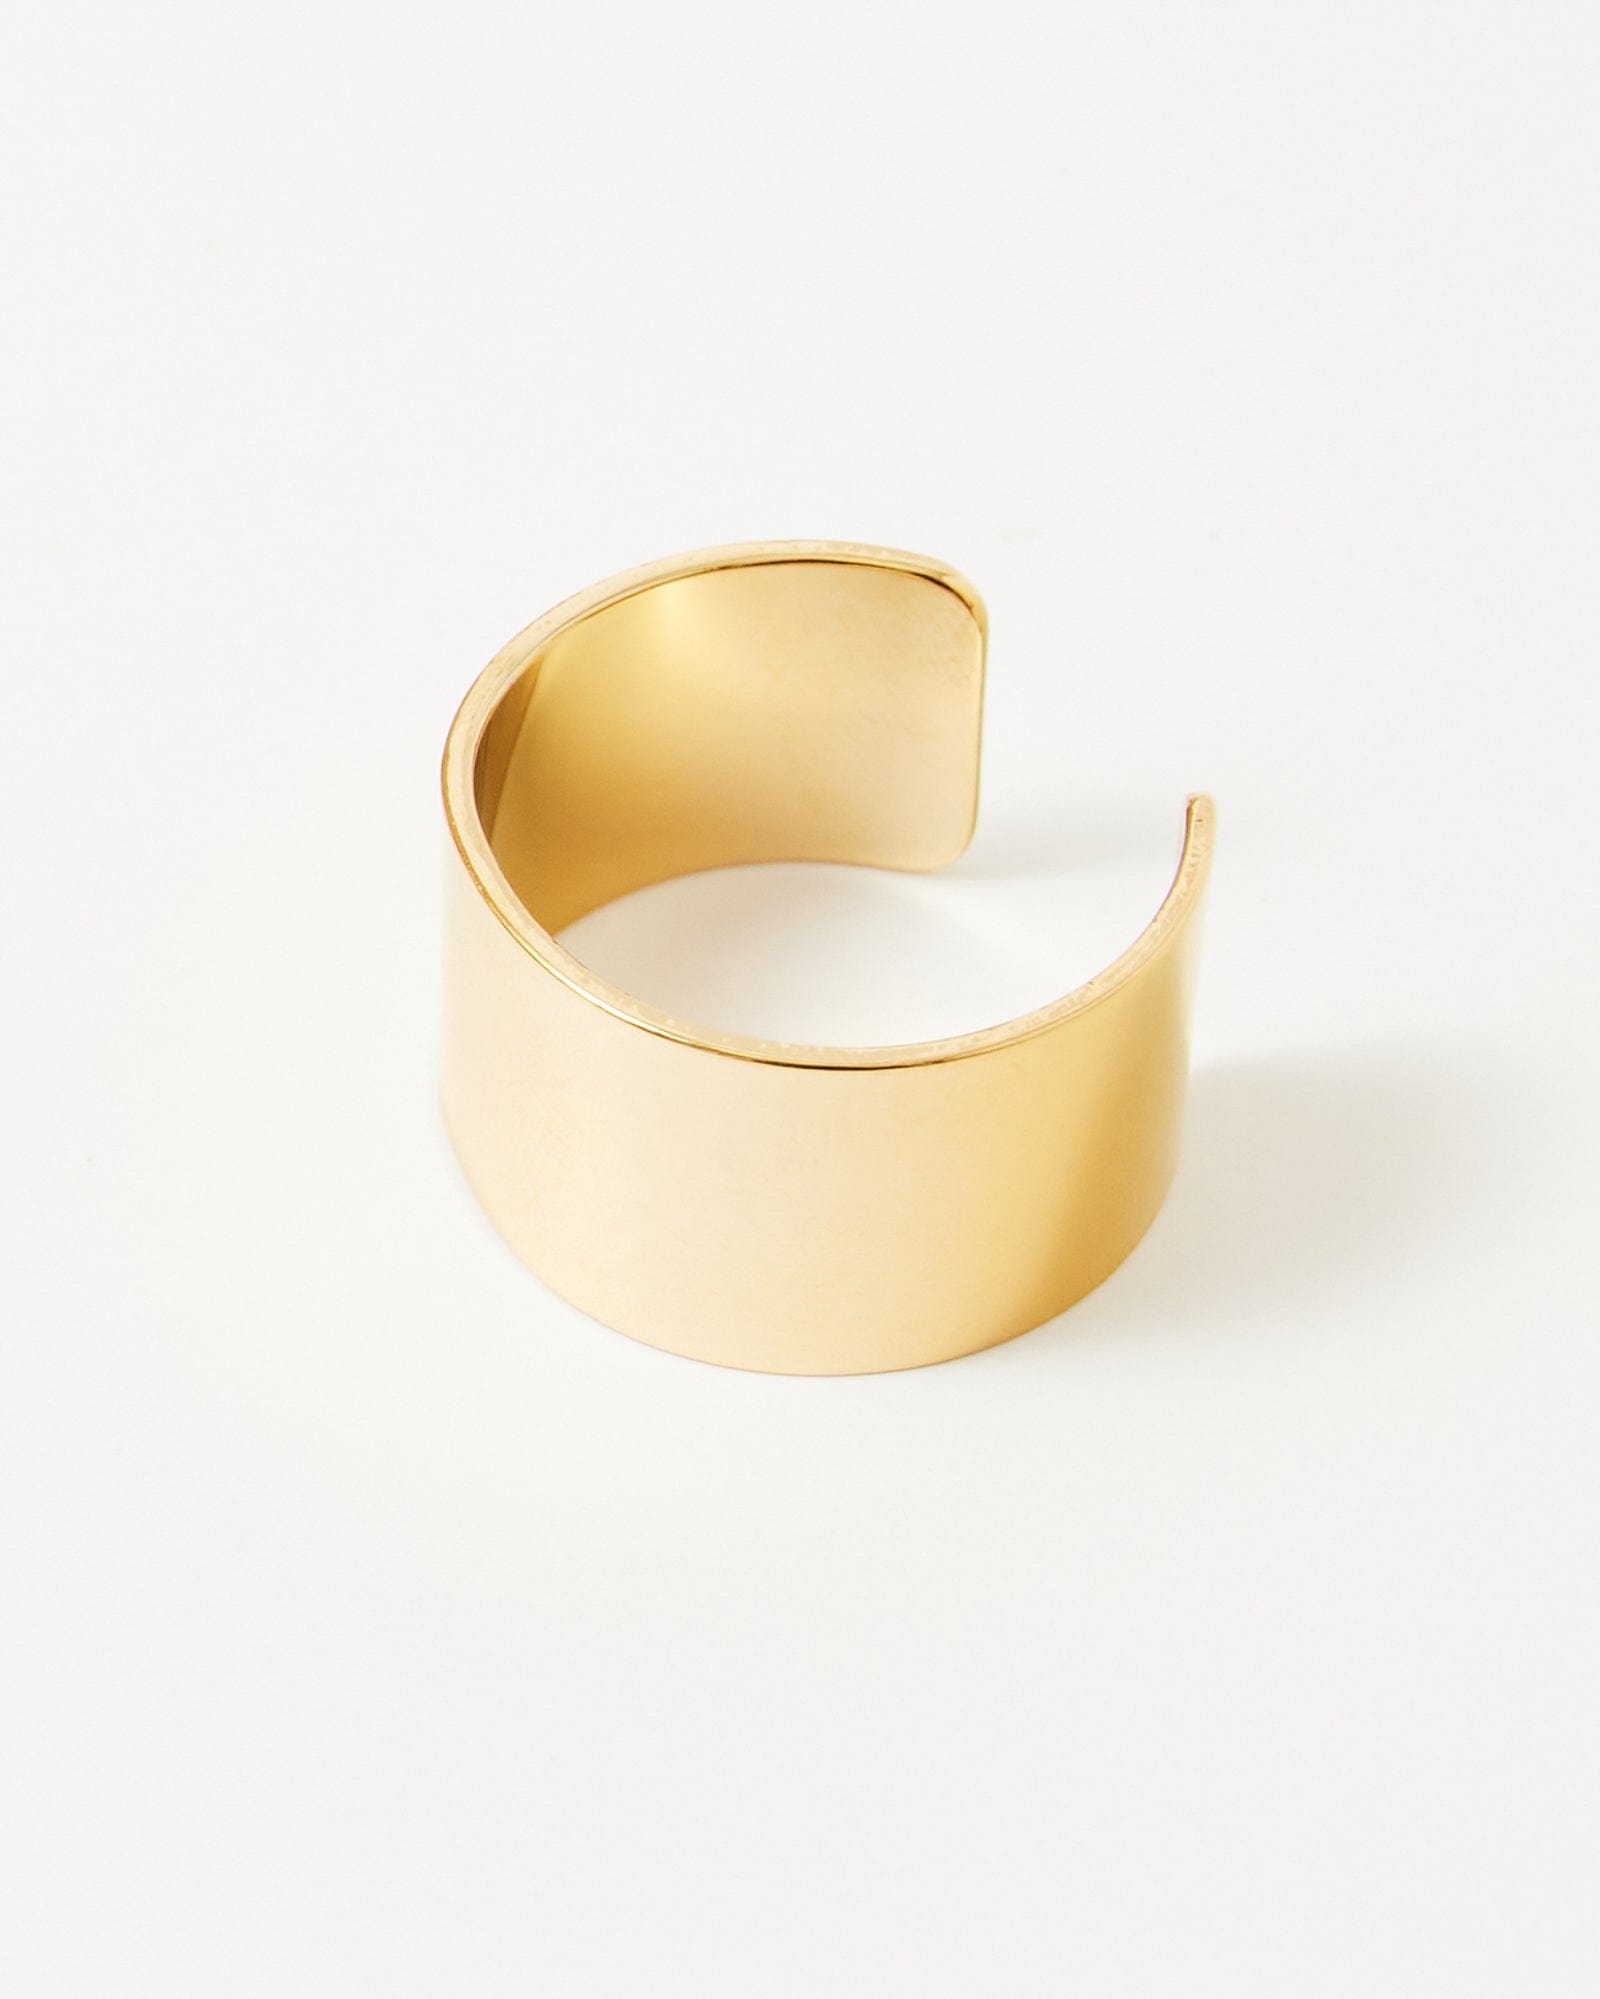 Thick gold ring resembling a cigar band.